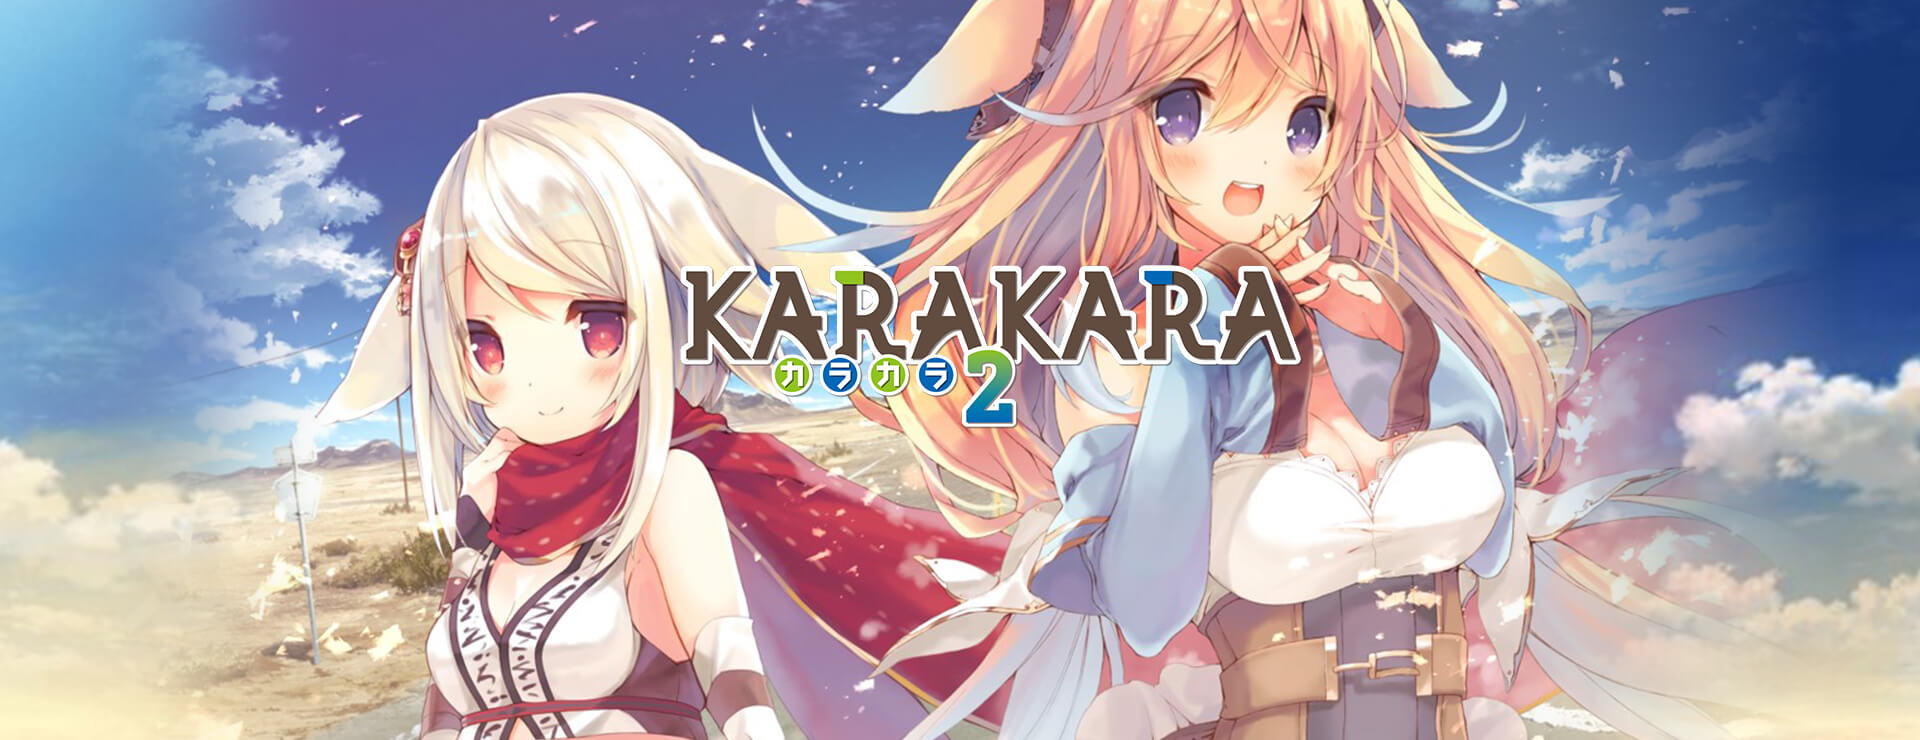 KARAKARA2 - Powieść wizualna Gra